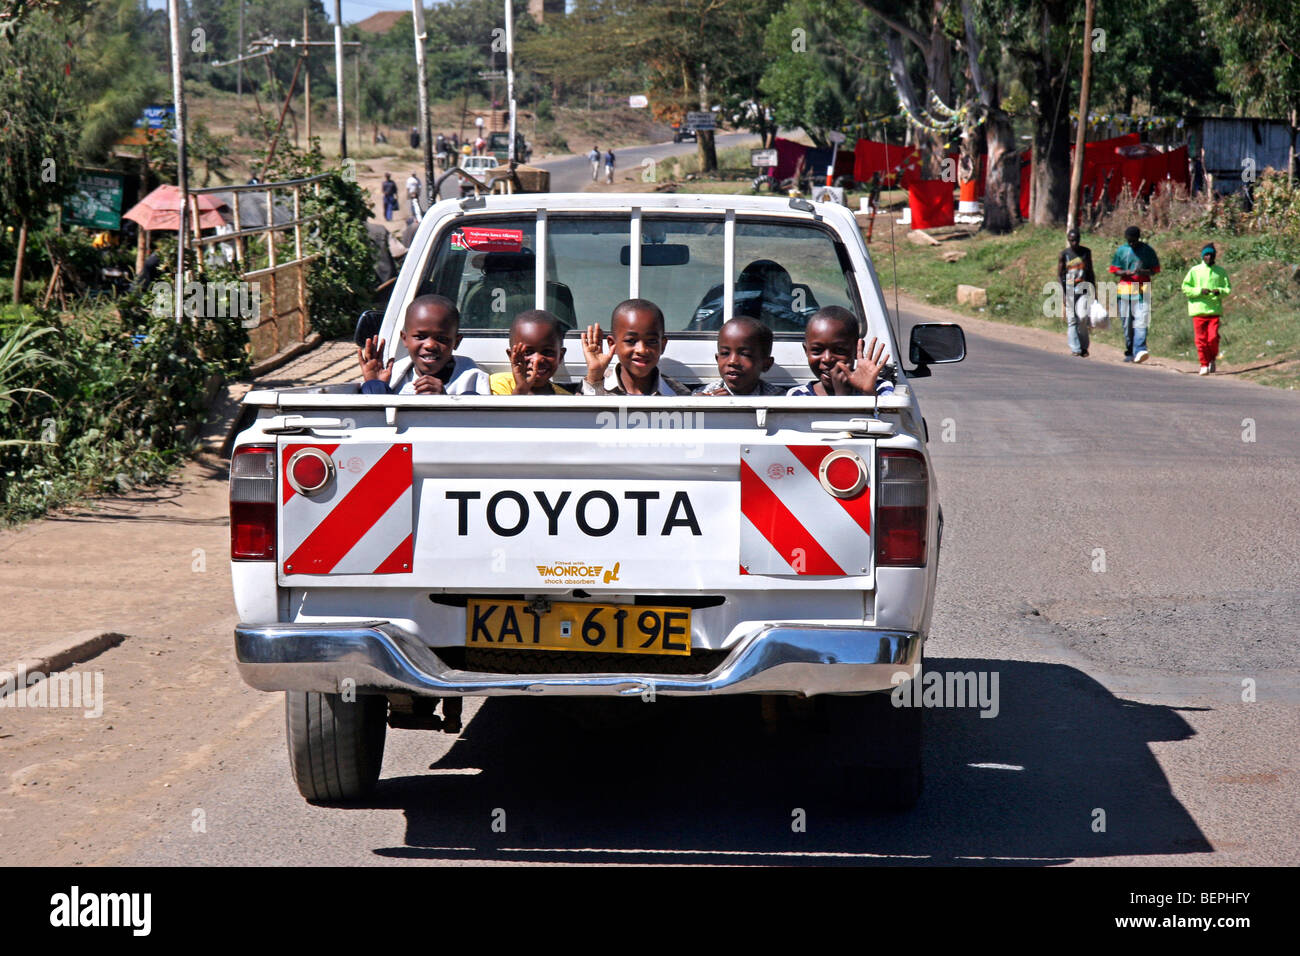 smiling-children-riding-in-the-back-of-pickup-truck-at-nairobi-kenya-BEPHFY.jpg